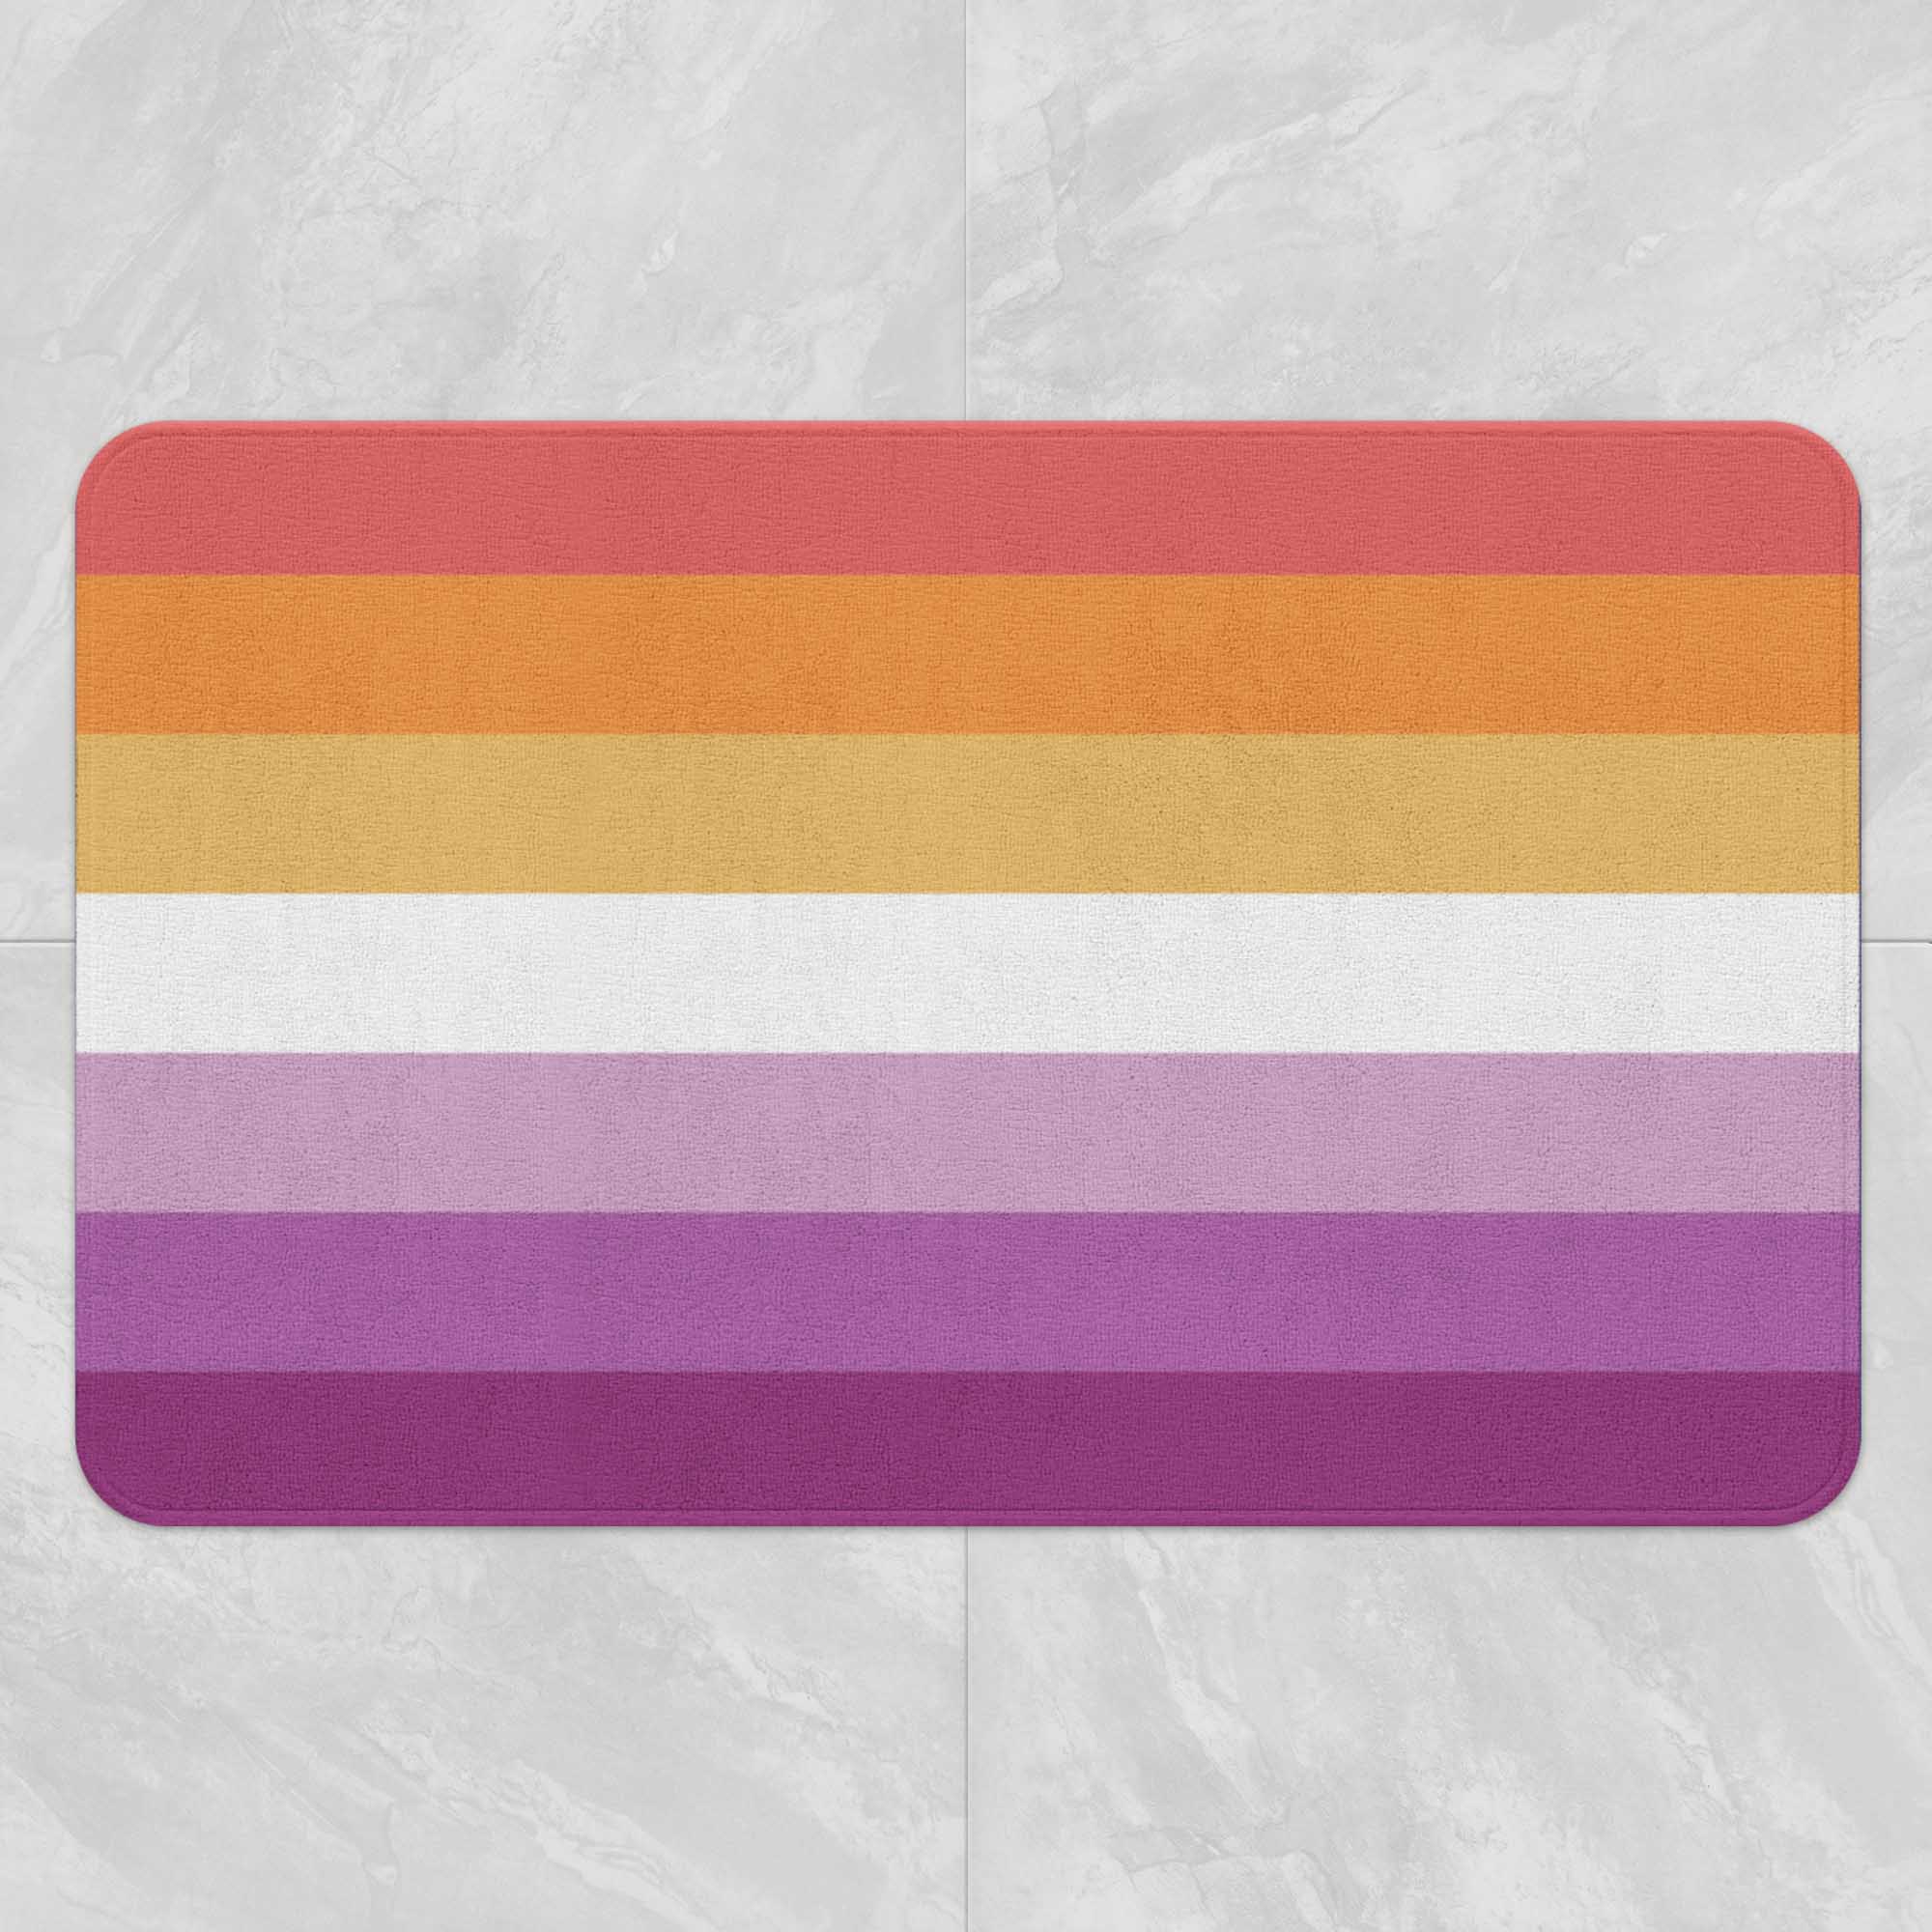 Feblilac Purple and Red LGBT Flag Bath Mat